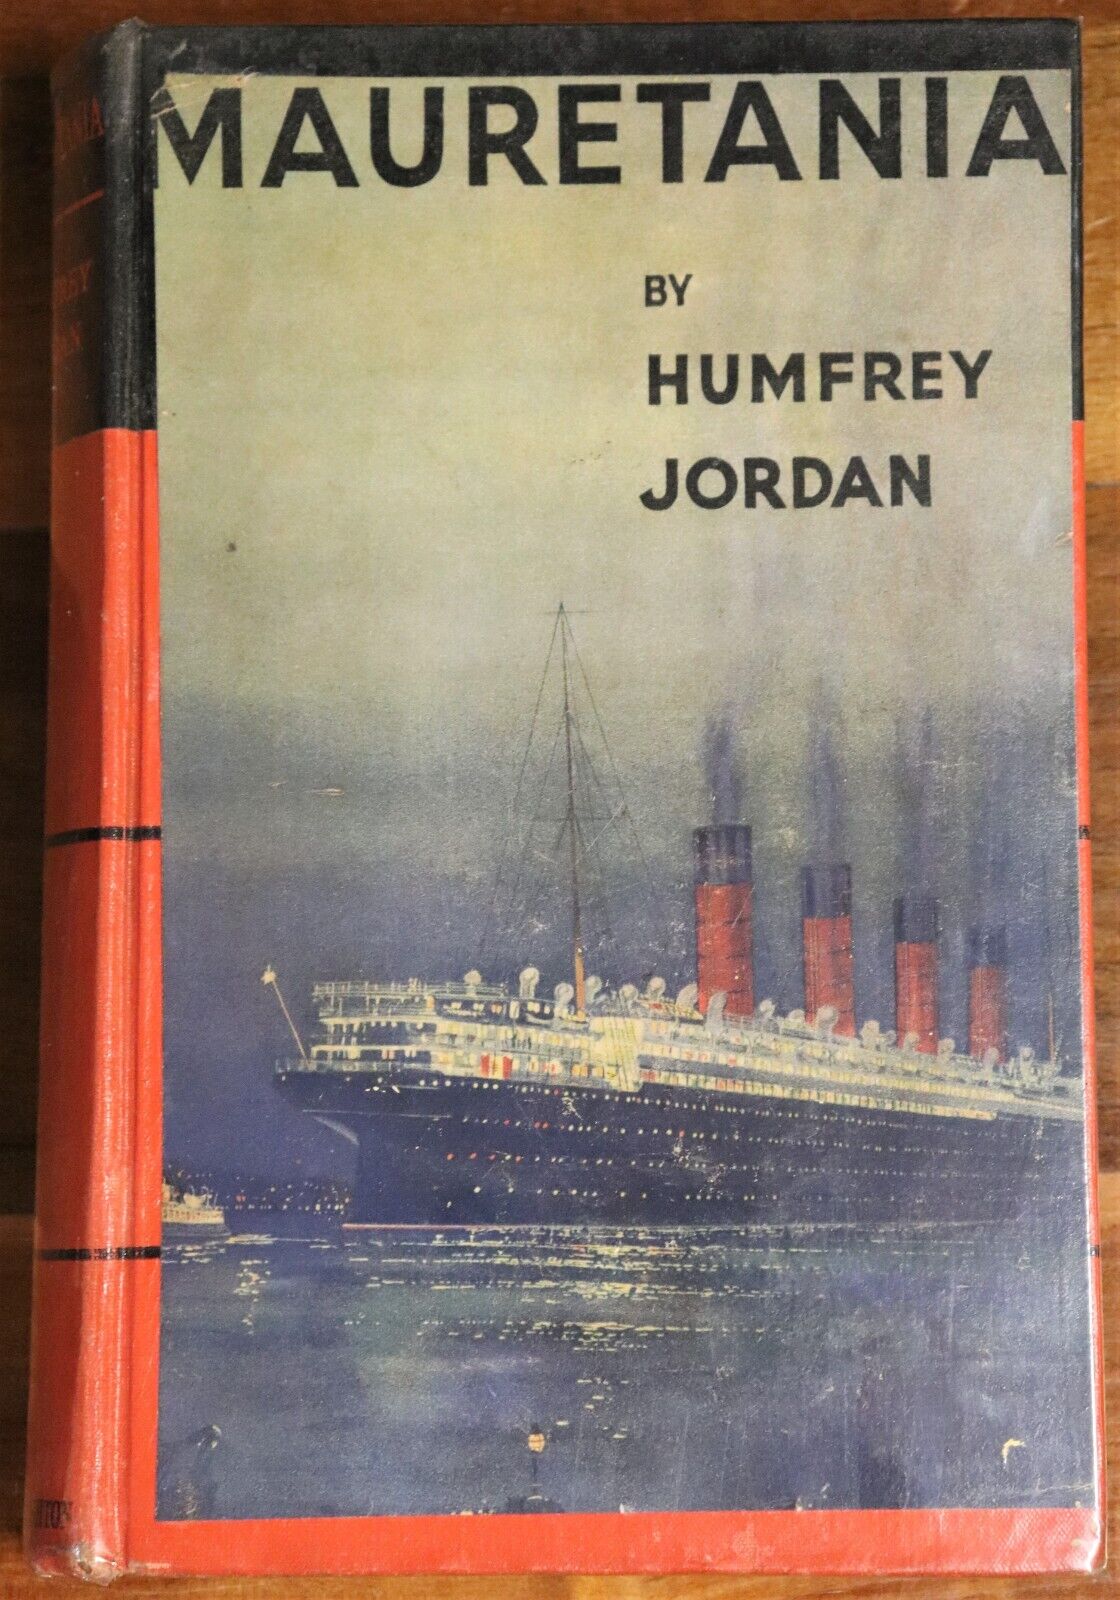 Mauretania by Humfrey Jordan - 1936 - 1st Edition Maritime History Book - 0